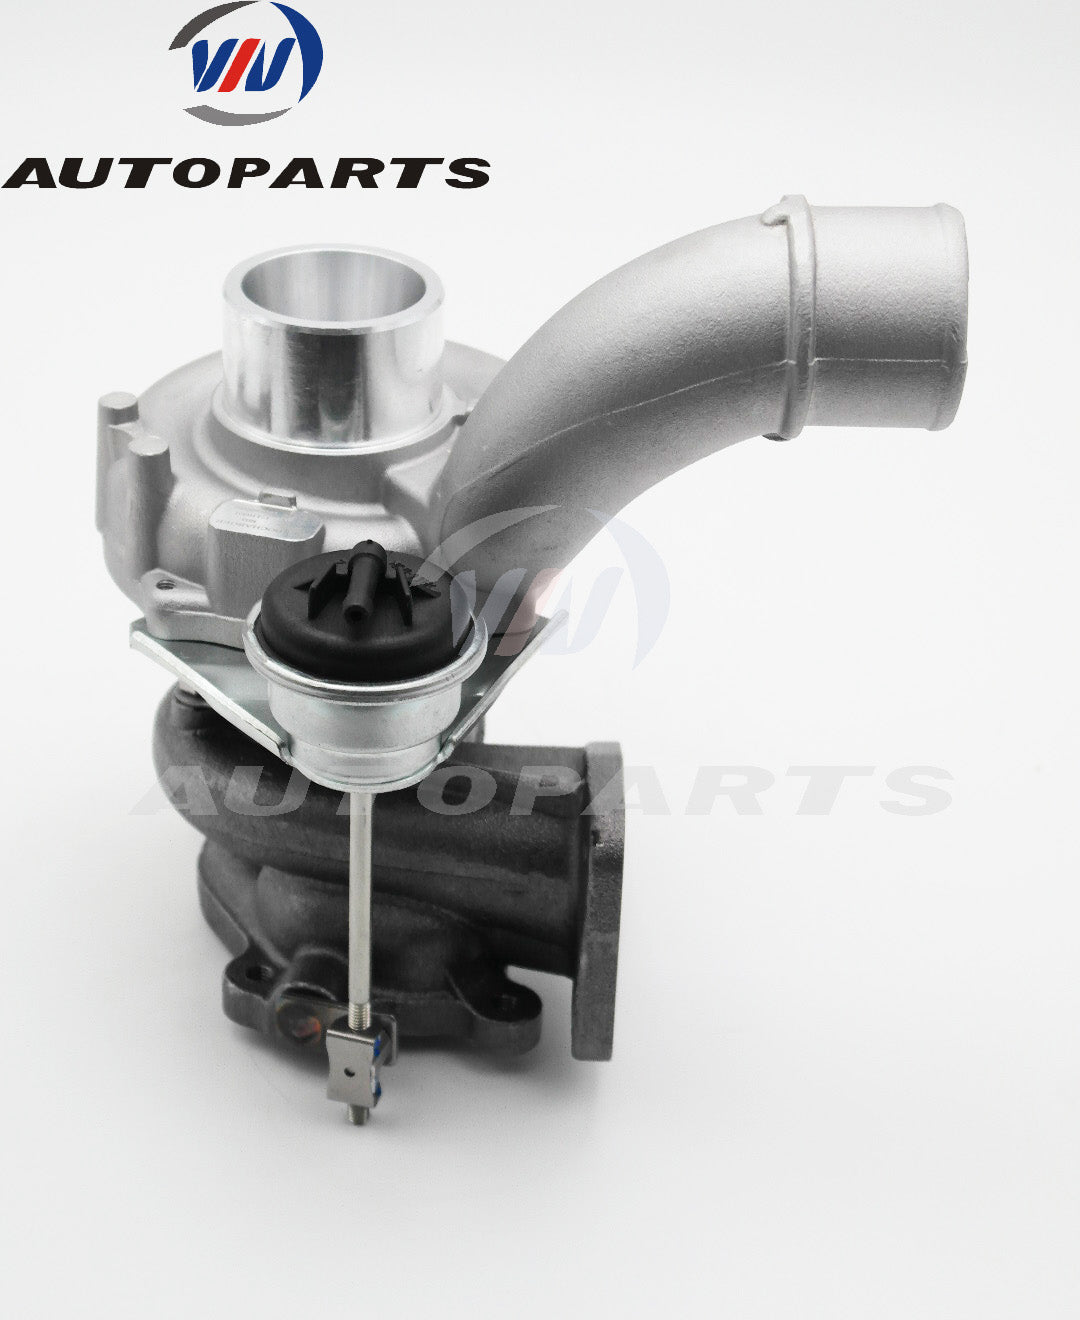 Billet Turbocharger 53039880055 for Opel Renault varies 2.5L Diesel Engine